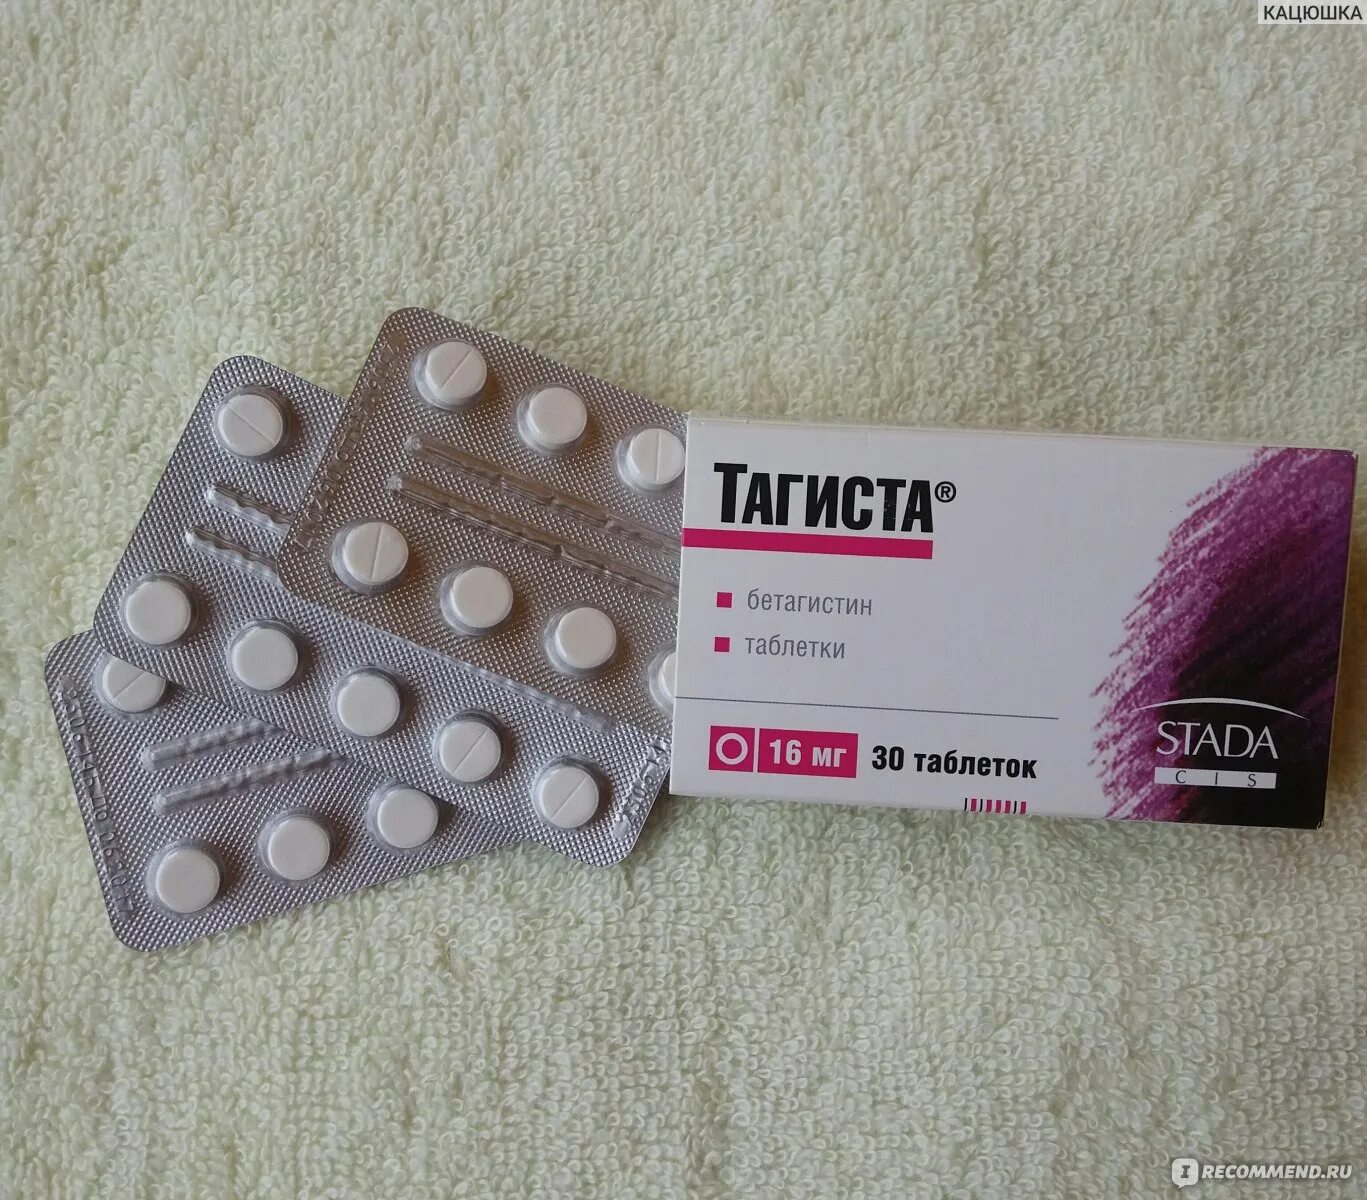 Тагиста 8 мг. Тагиста таблетки от головокружения. Тагиста 16 мг. Бетагистин тагиста.